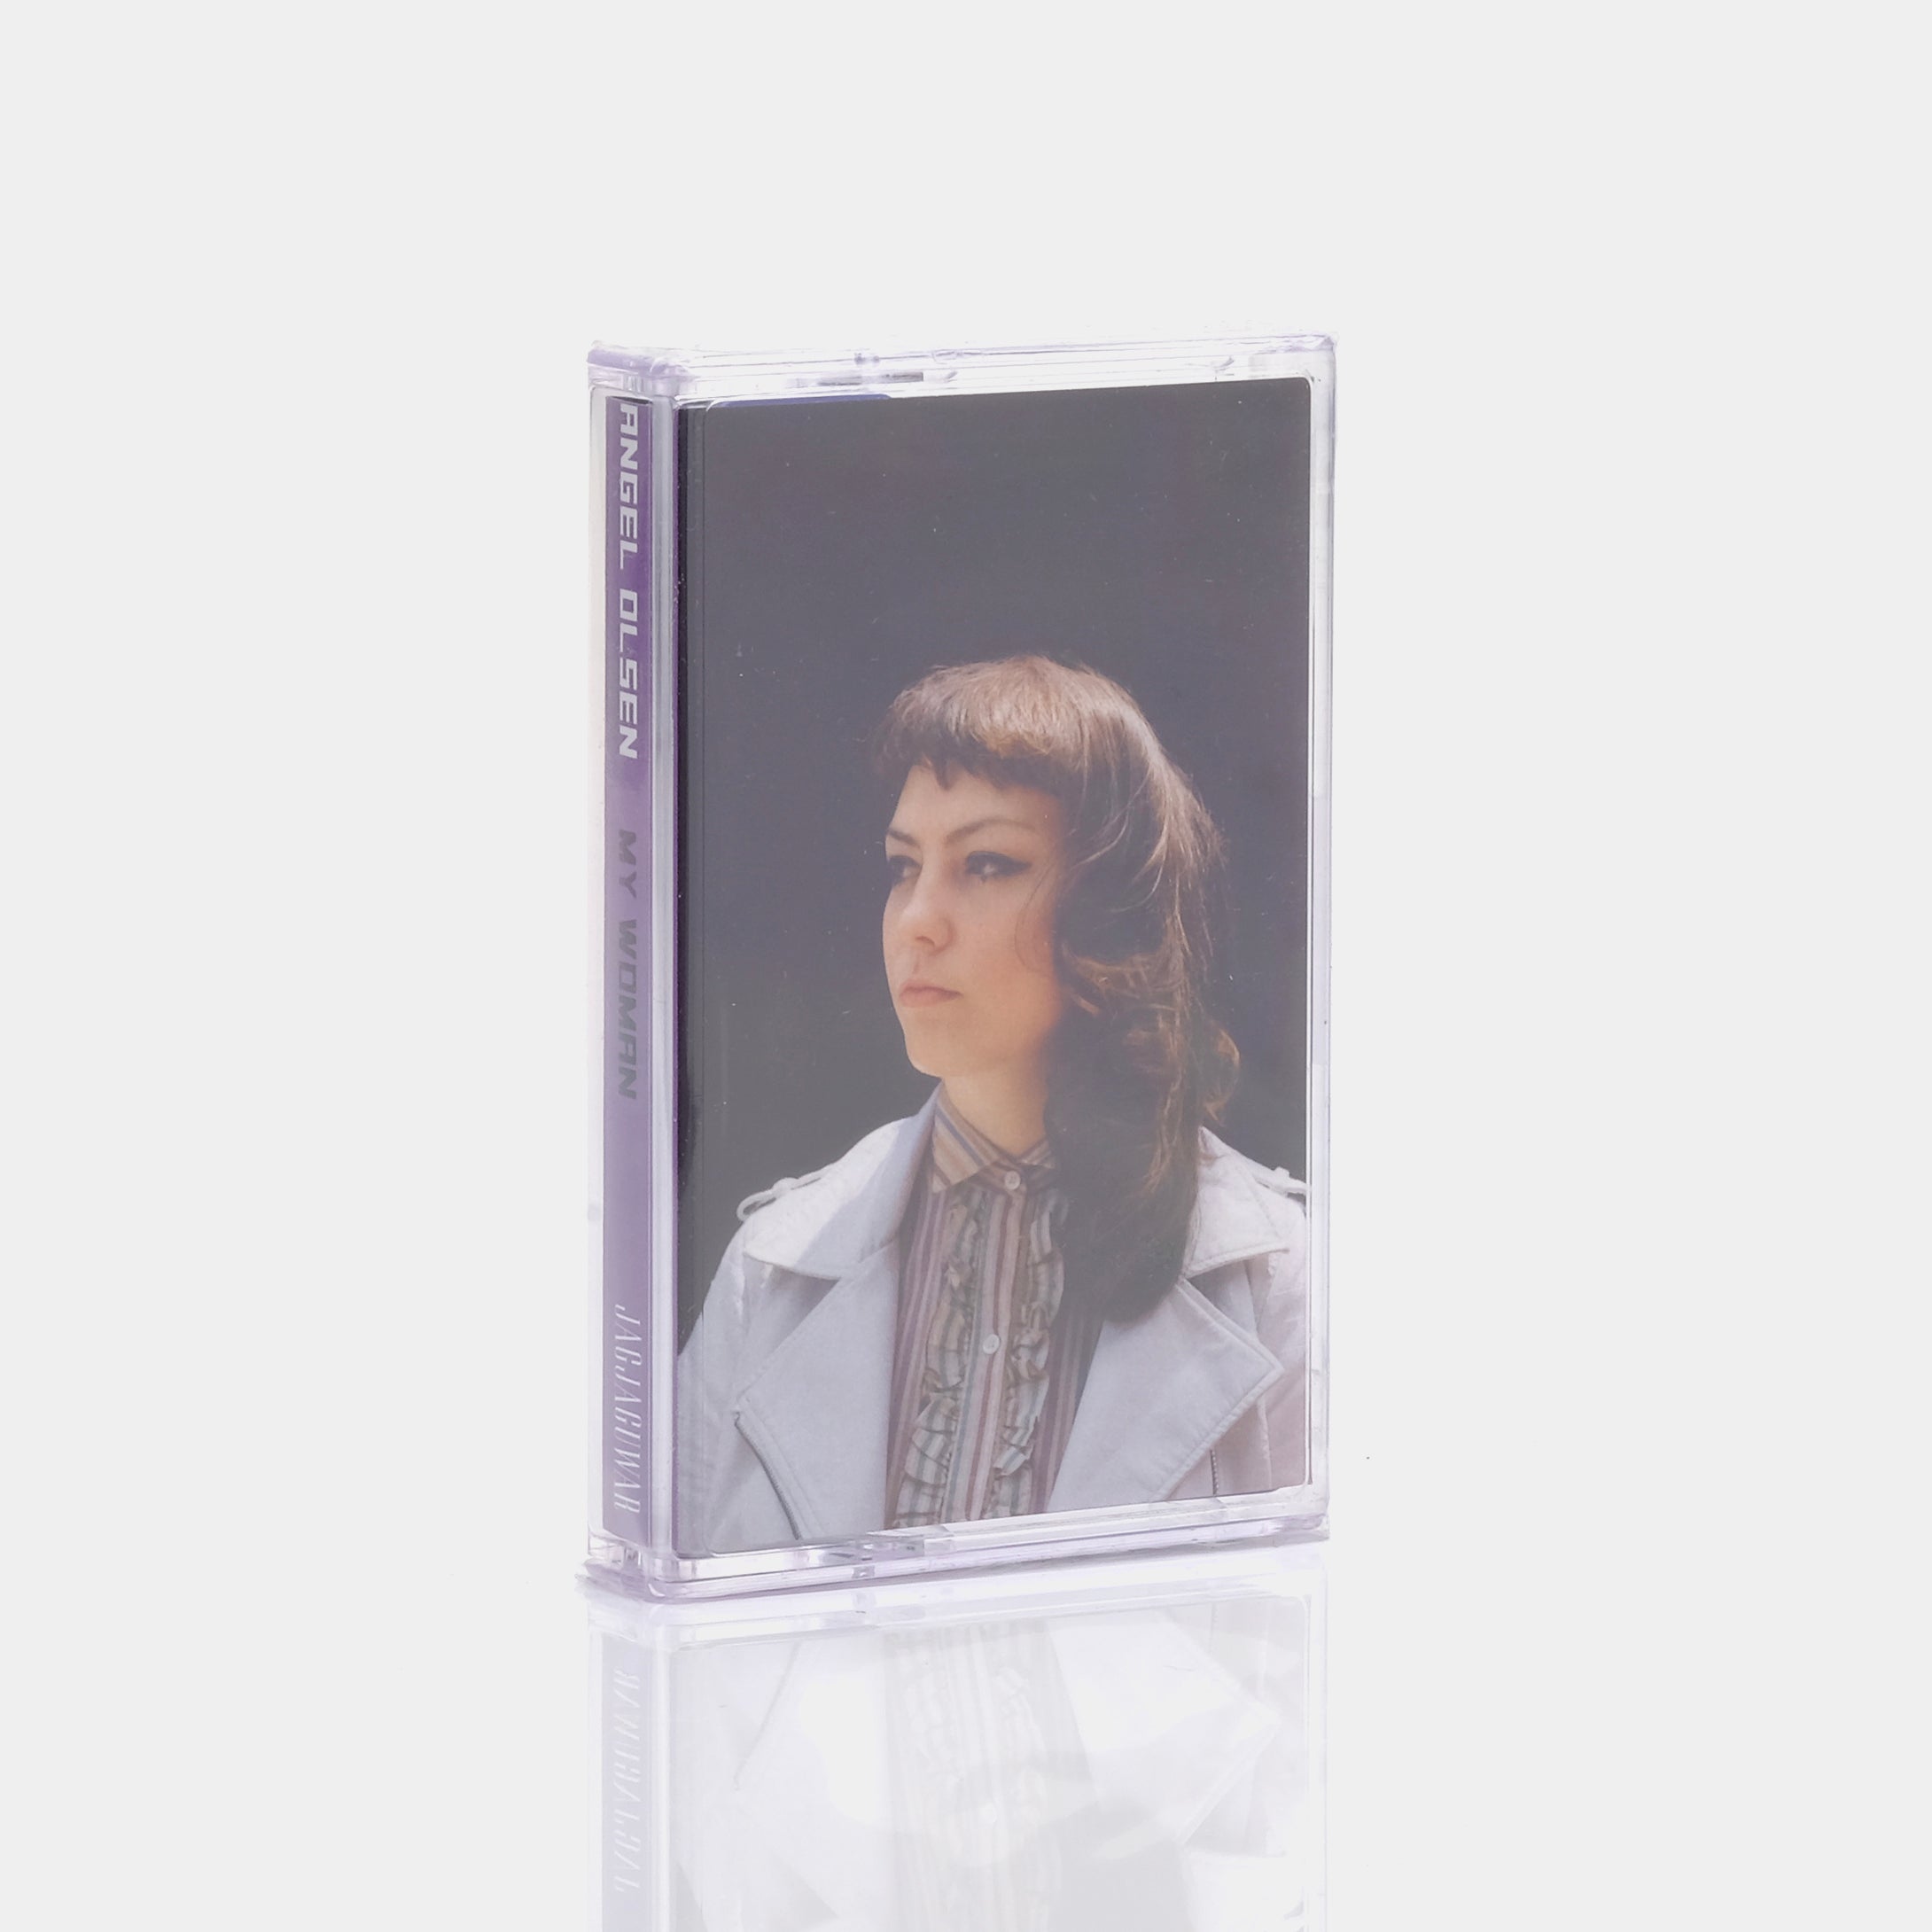 Angel Olsen - MY WOMAN Cassette Tape